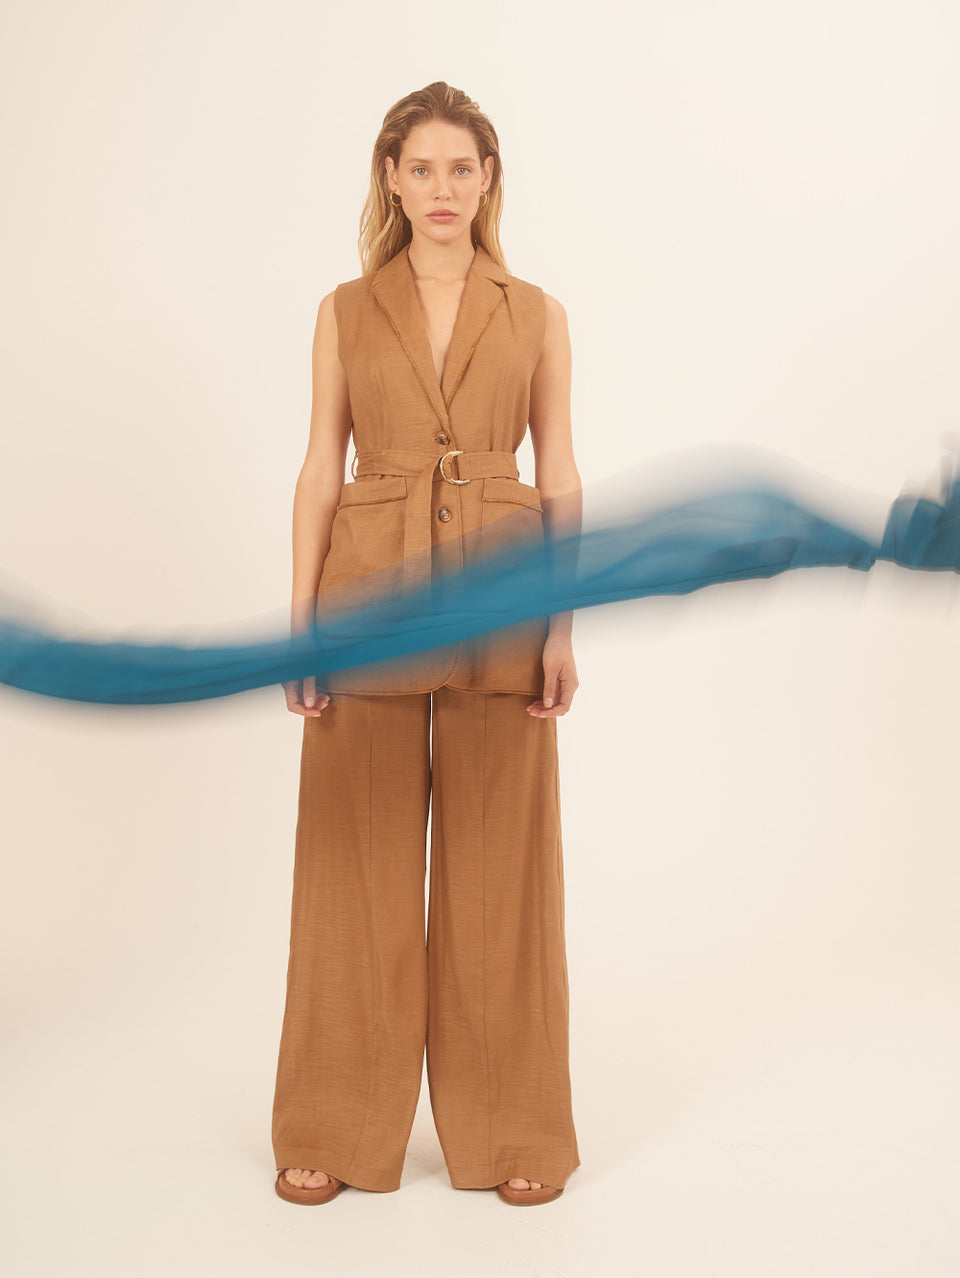 Penelope Vest KIVARI | Model wears brown tailored vest campaign